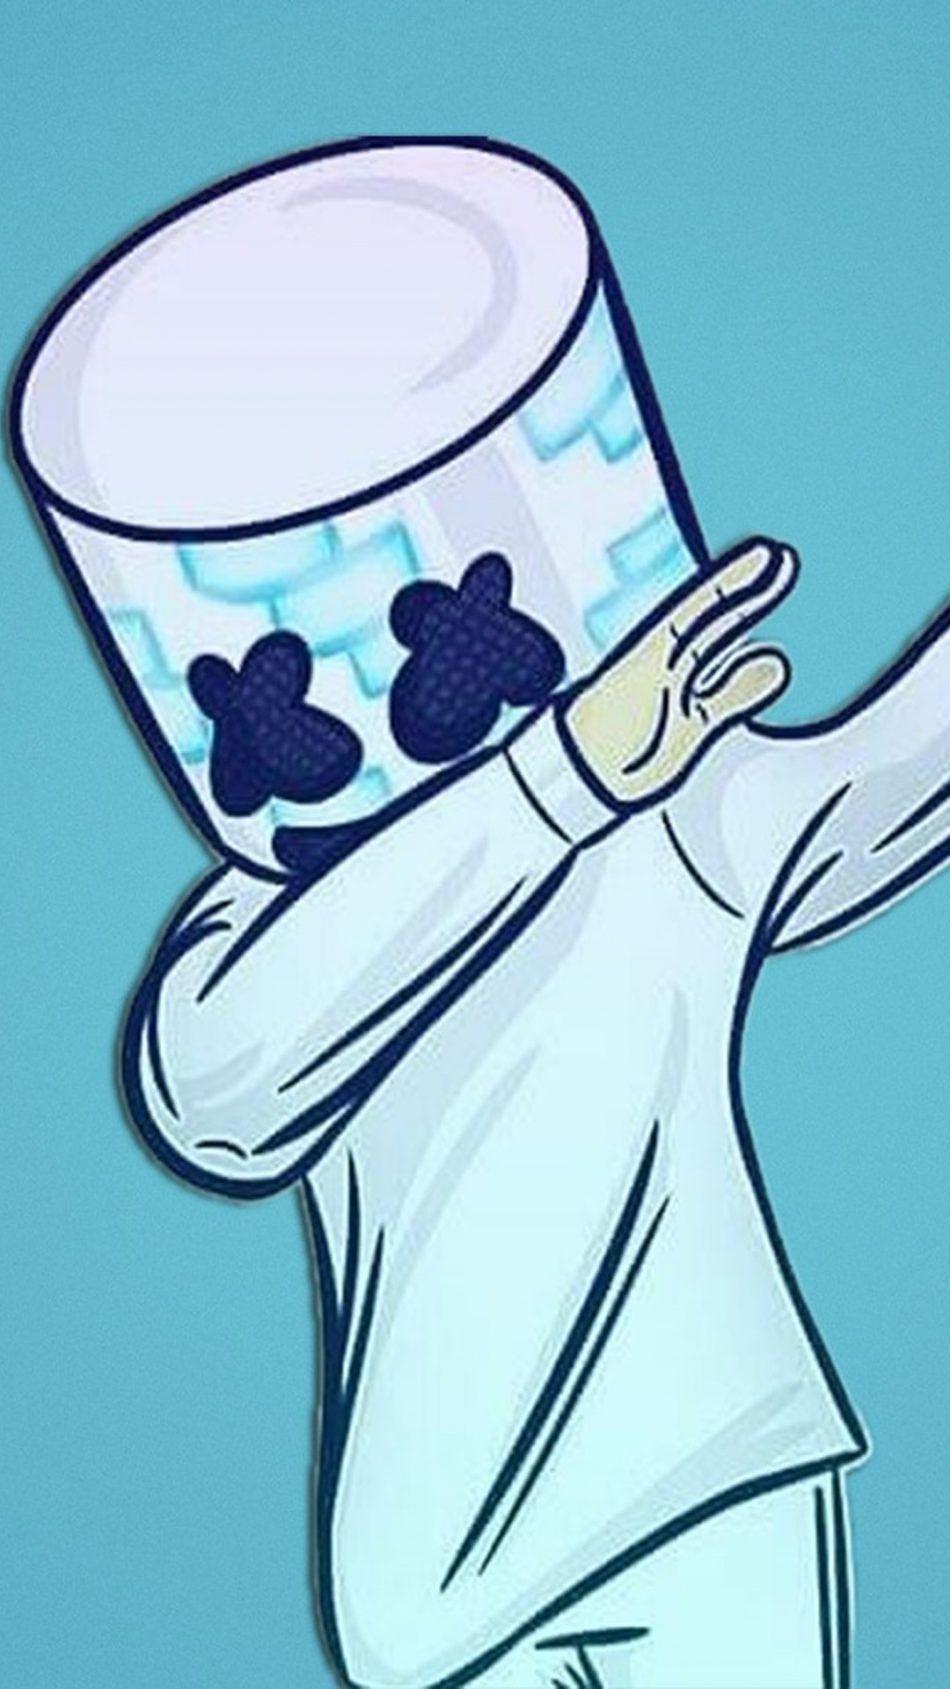 Marshmello Fan Artwork. Marshmello❤❤. Mobile wallpaper, Lock